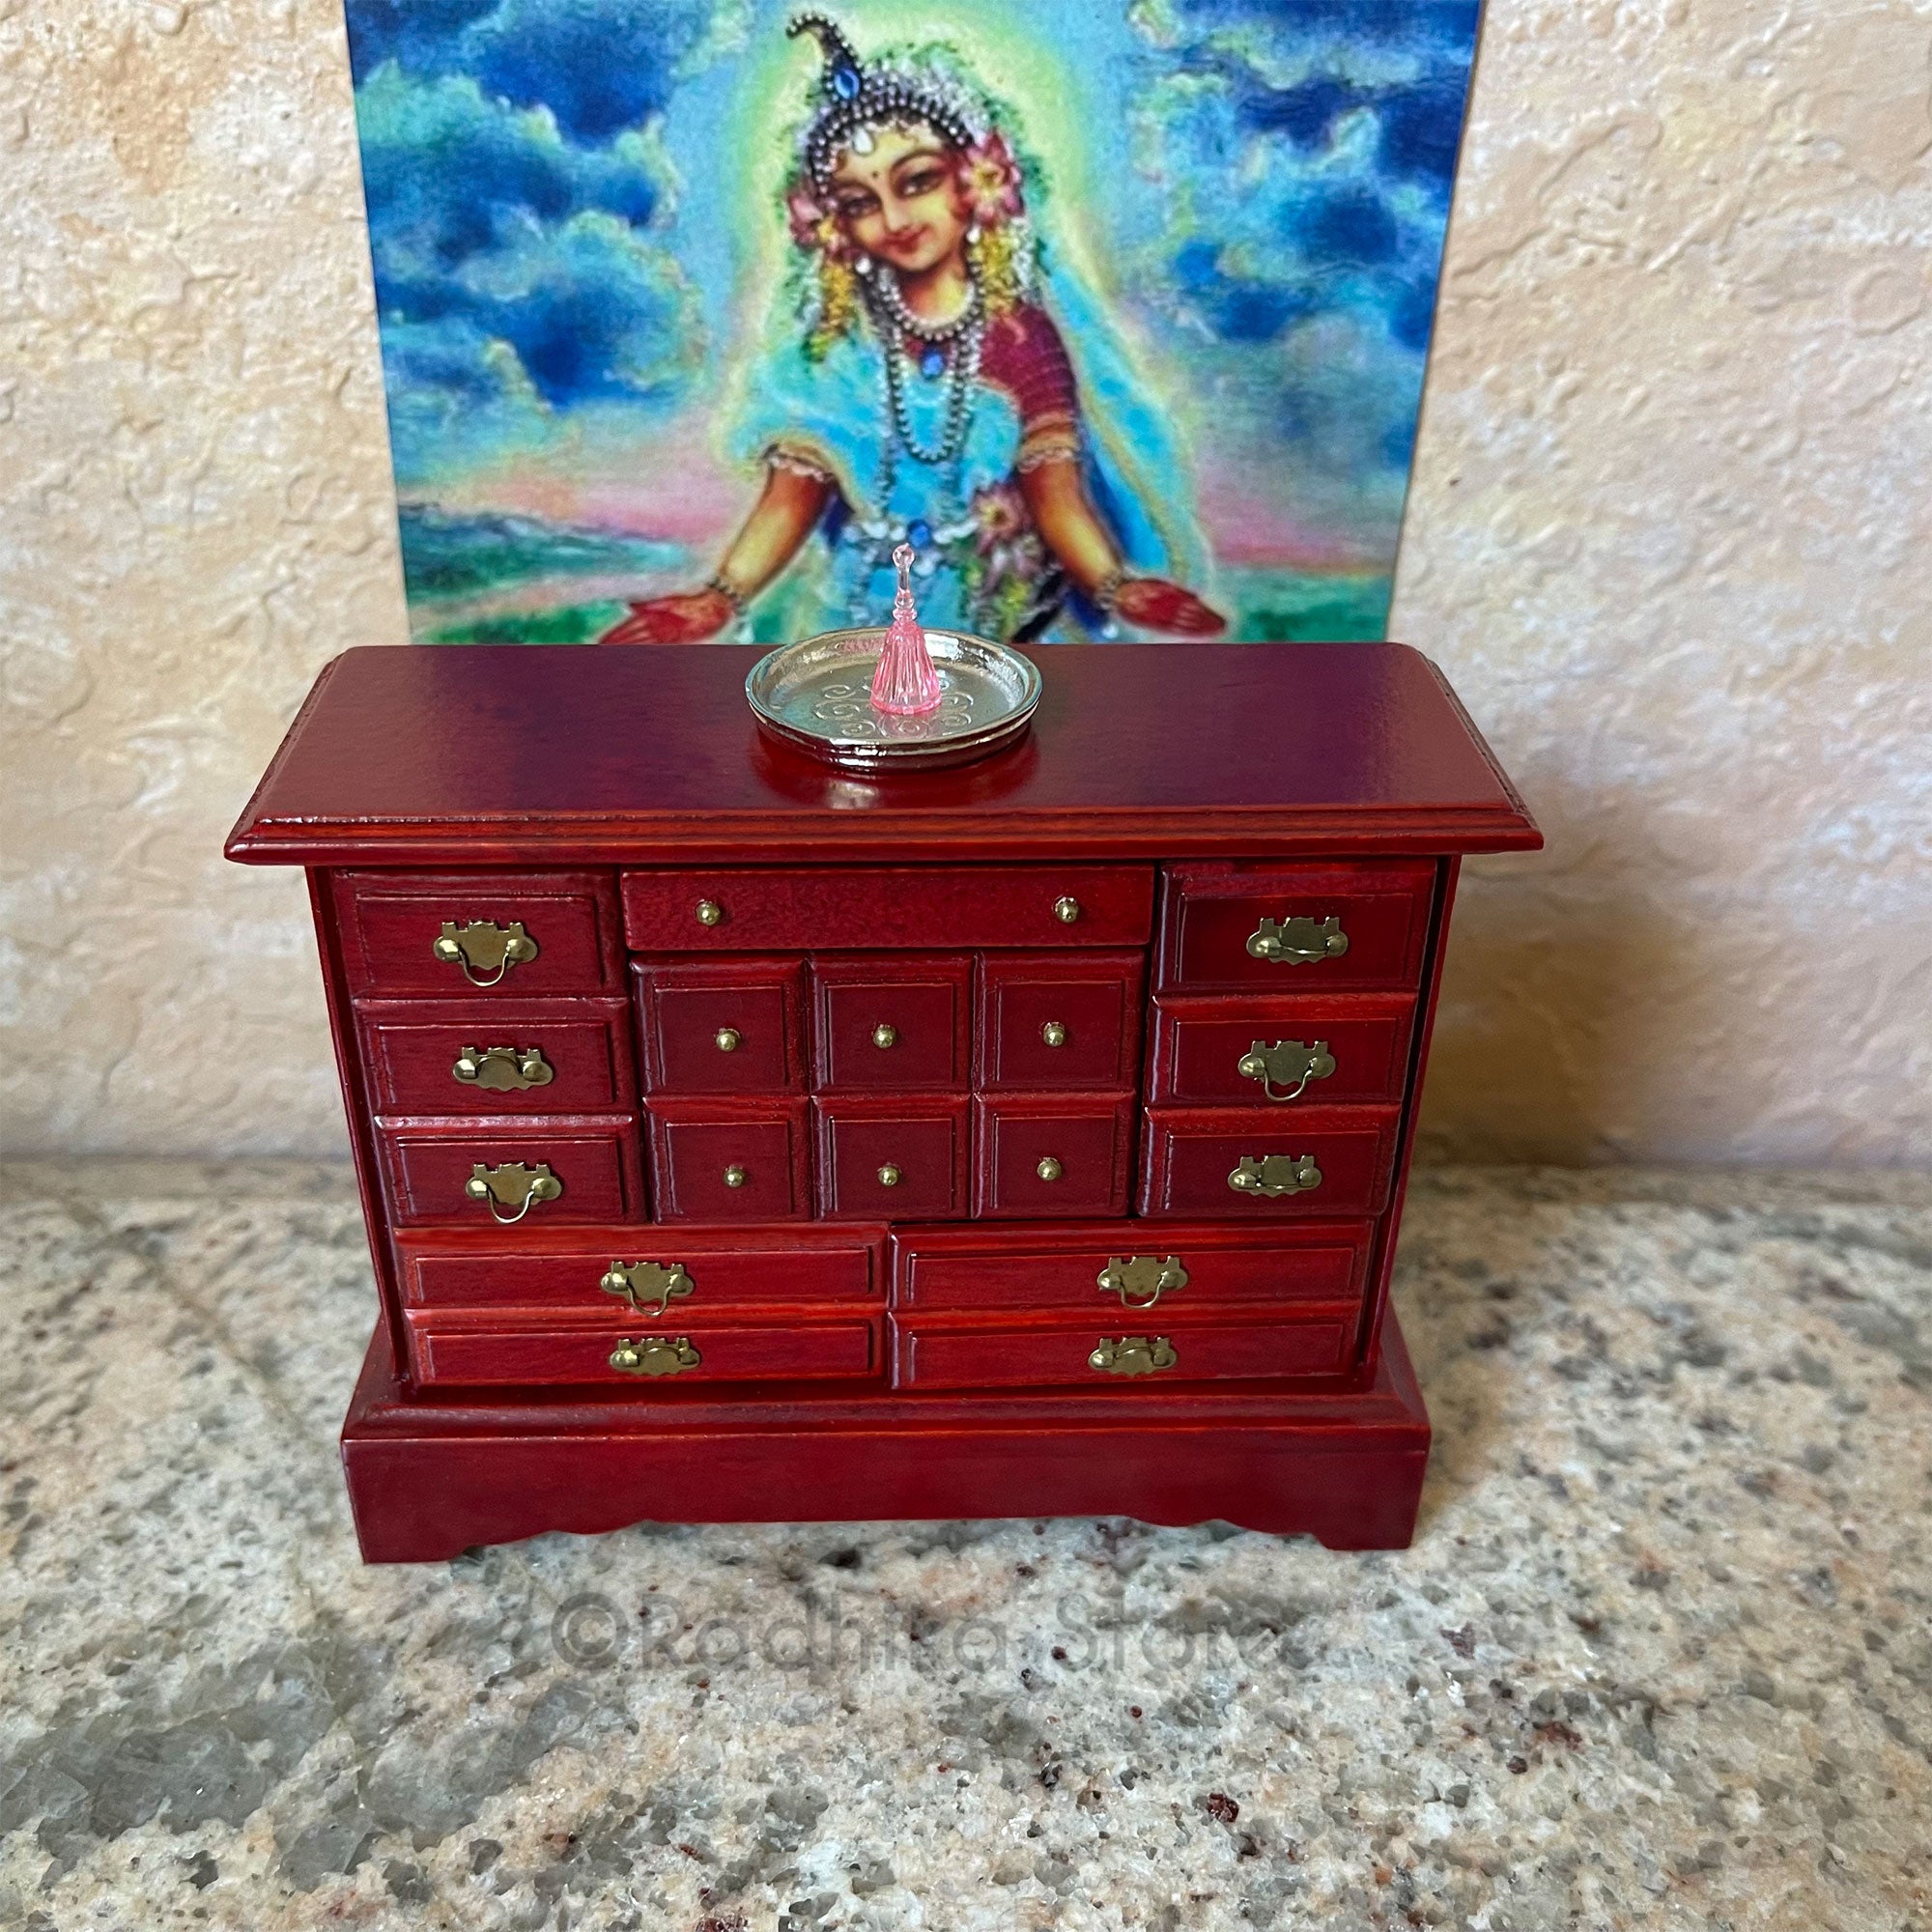 Palace Jewelry Box - Trinket Dresser - Cherry Wood Finish